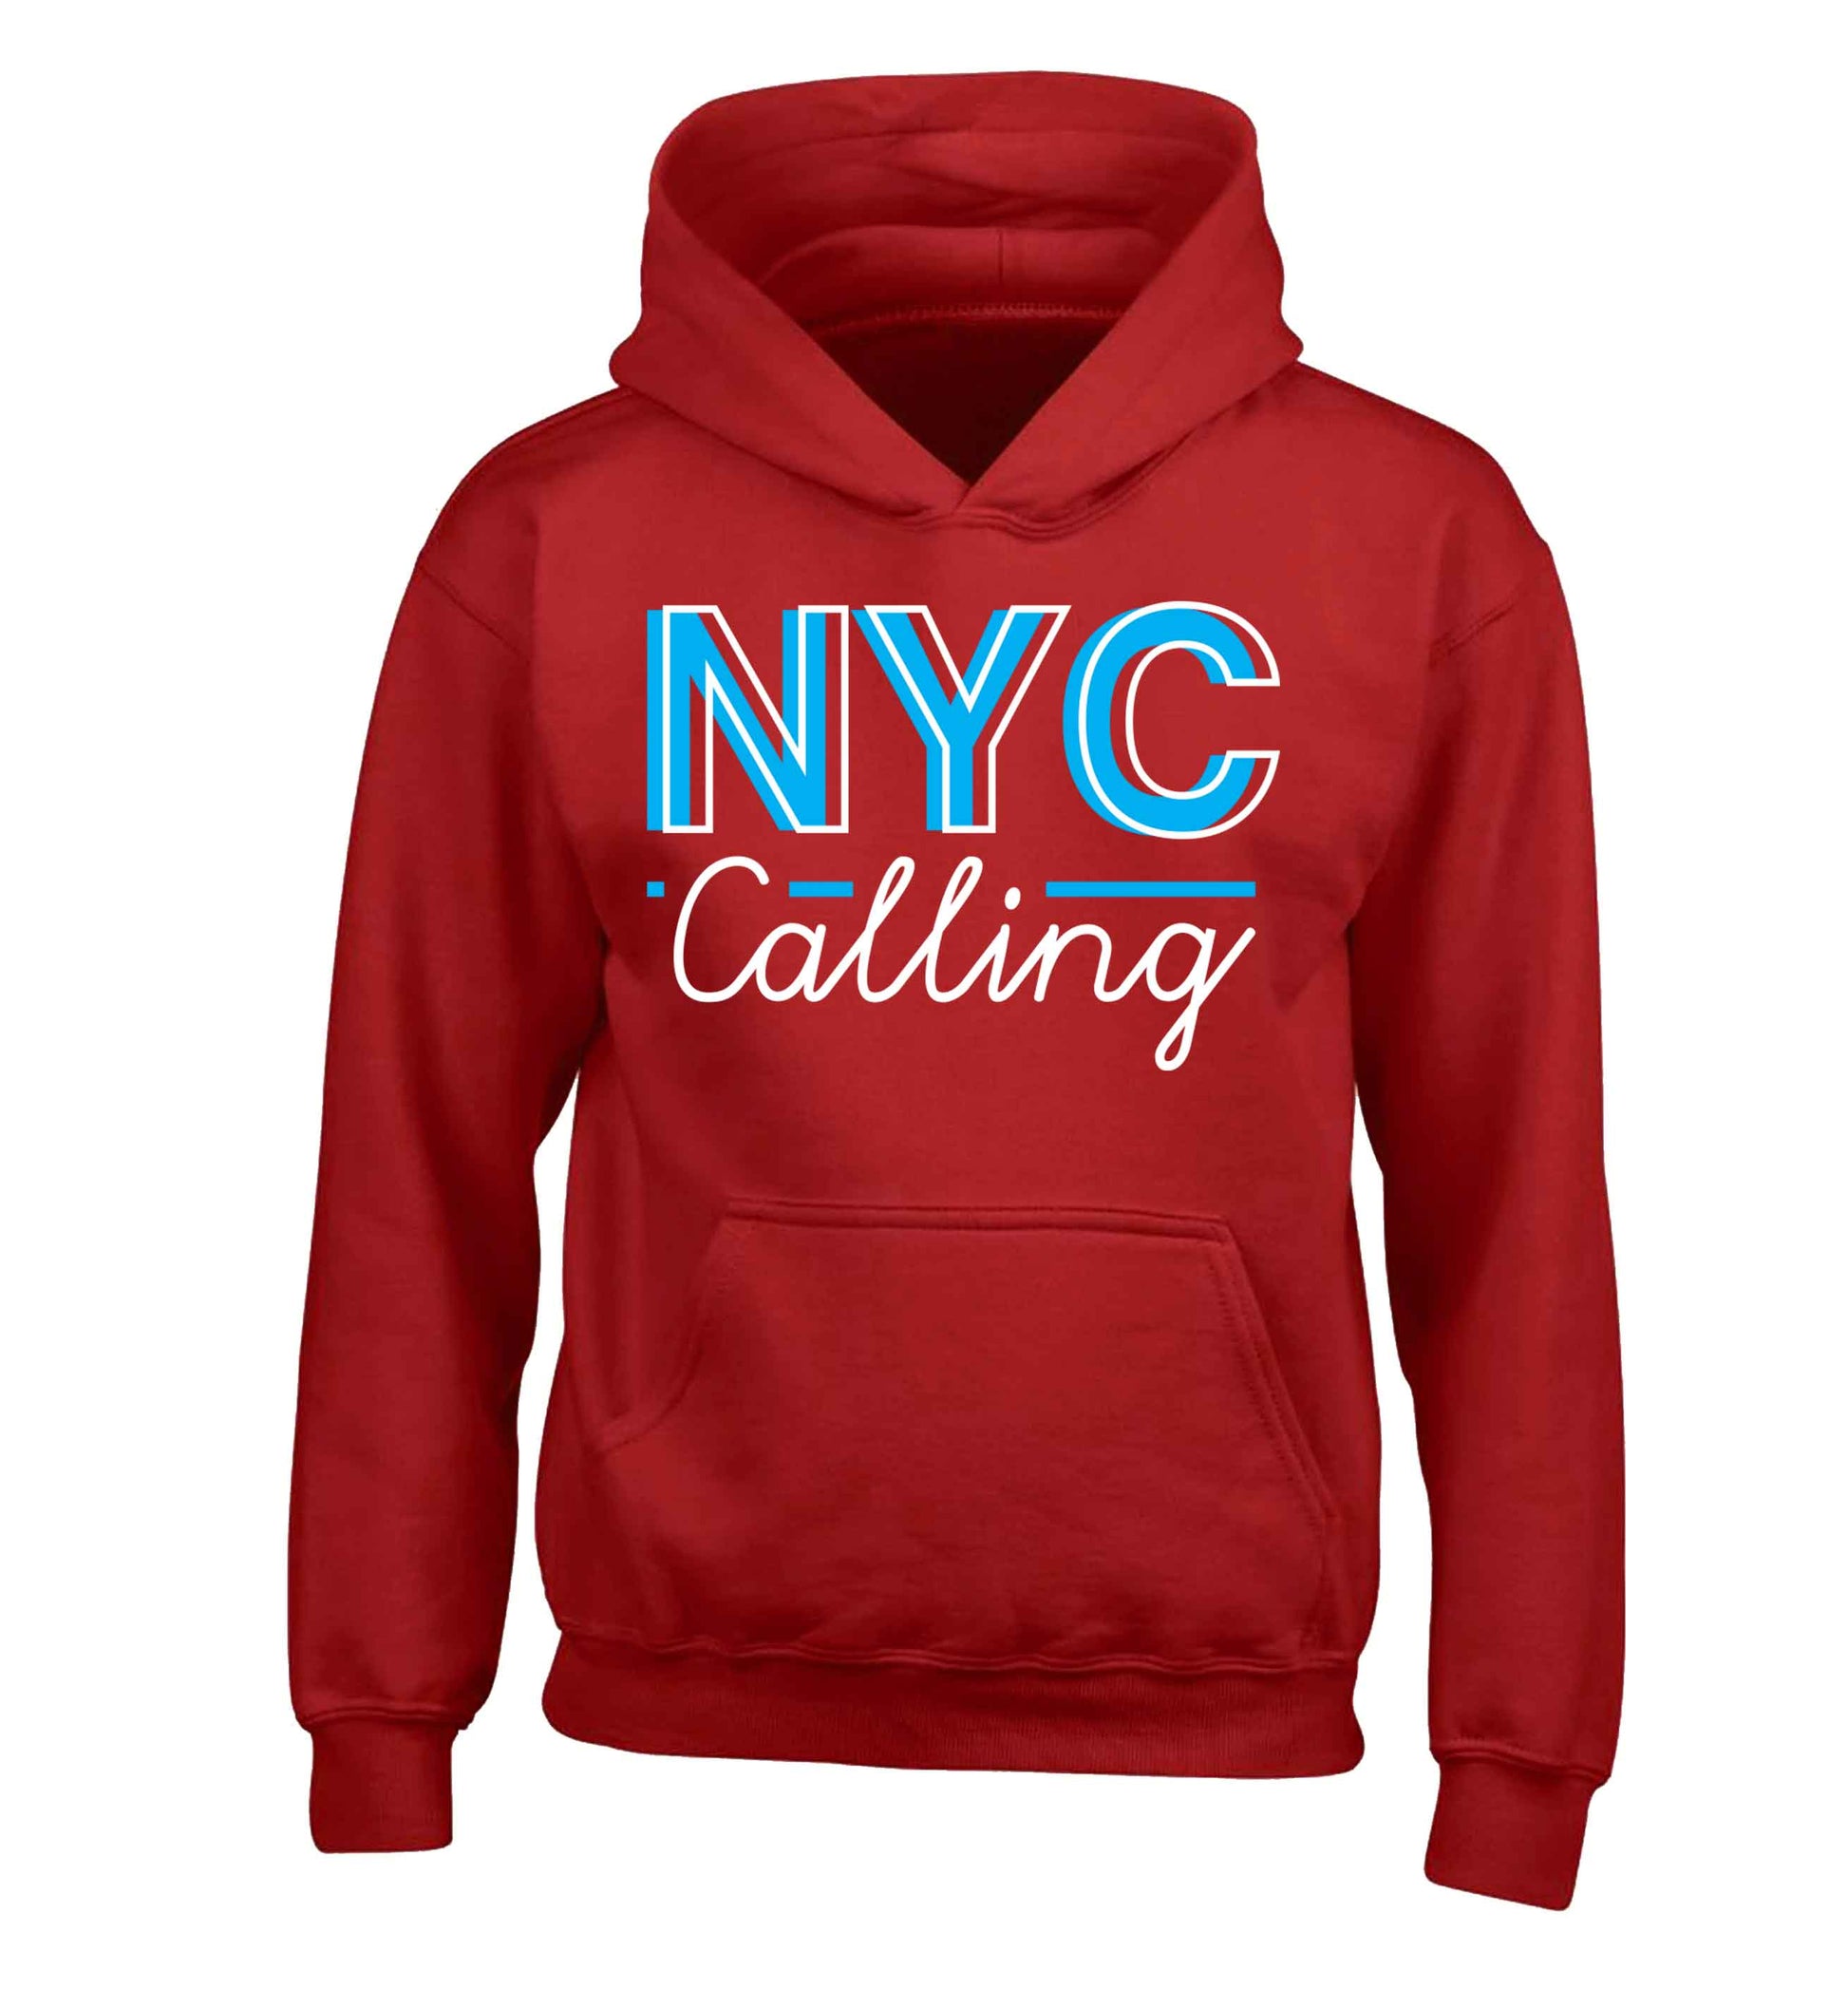 NYC calling children's red hoodie 12-13 Years